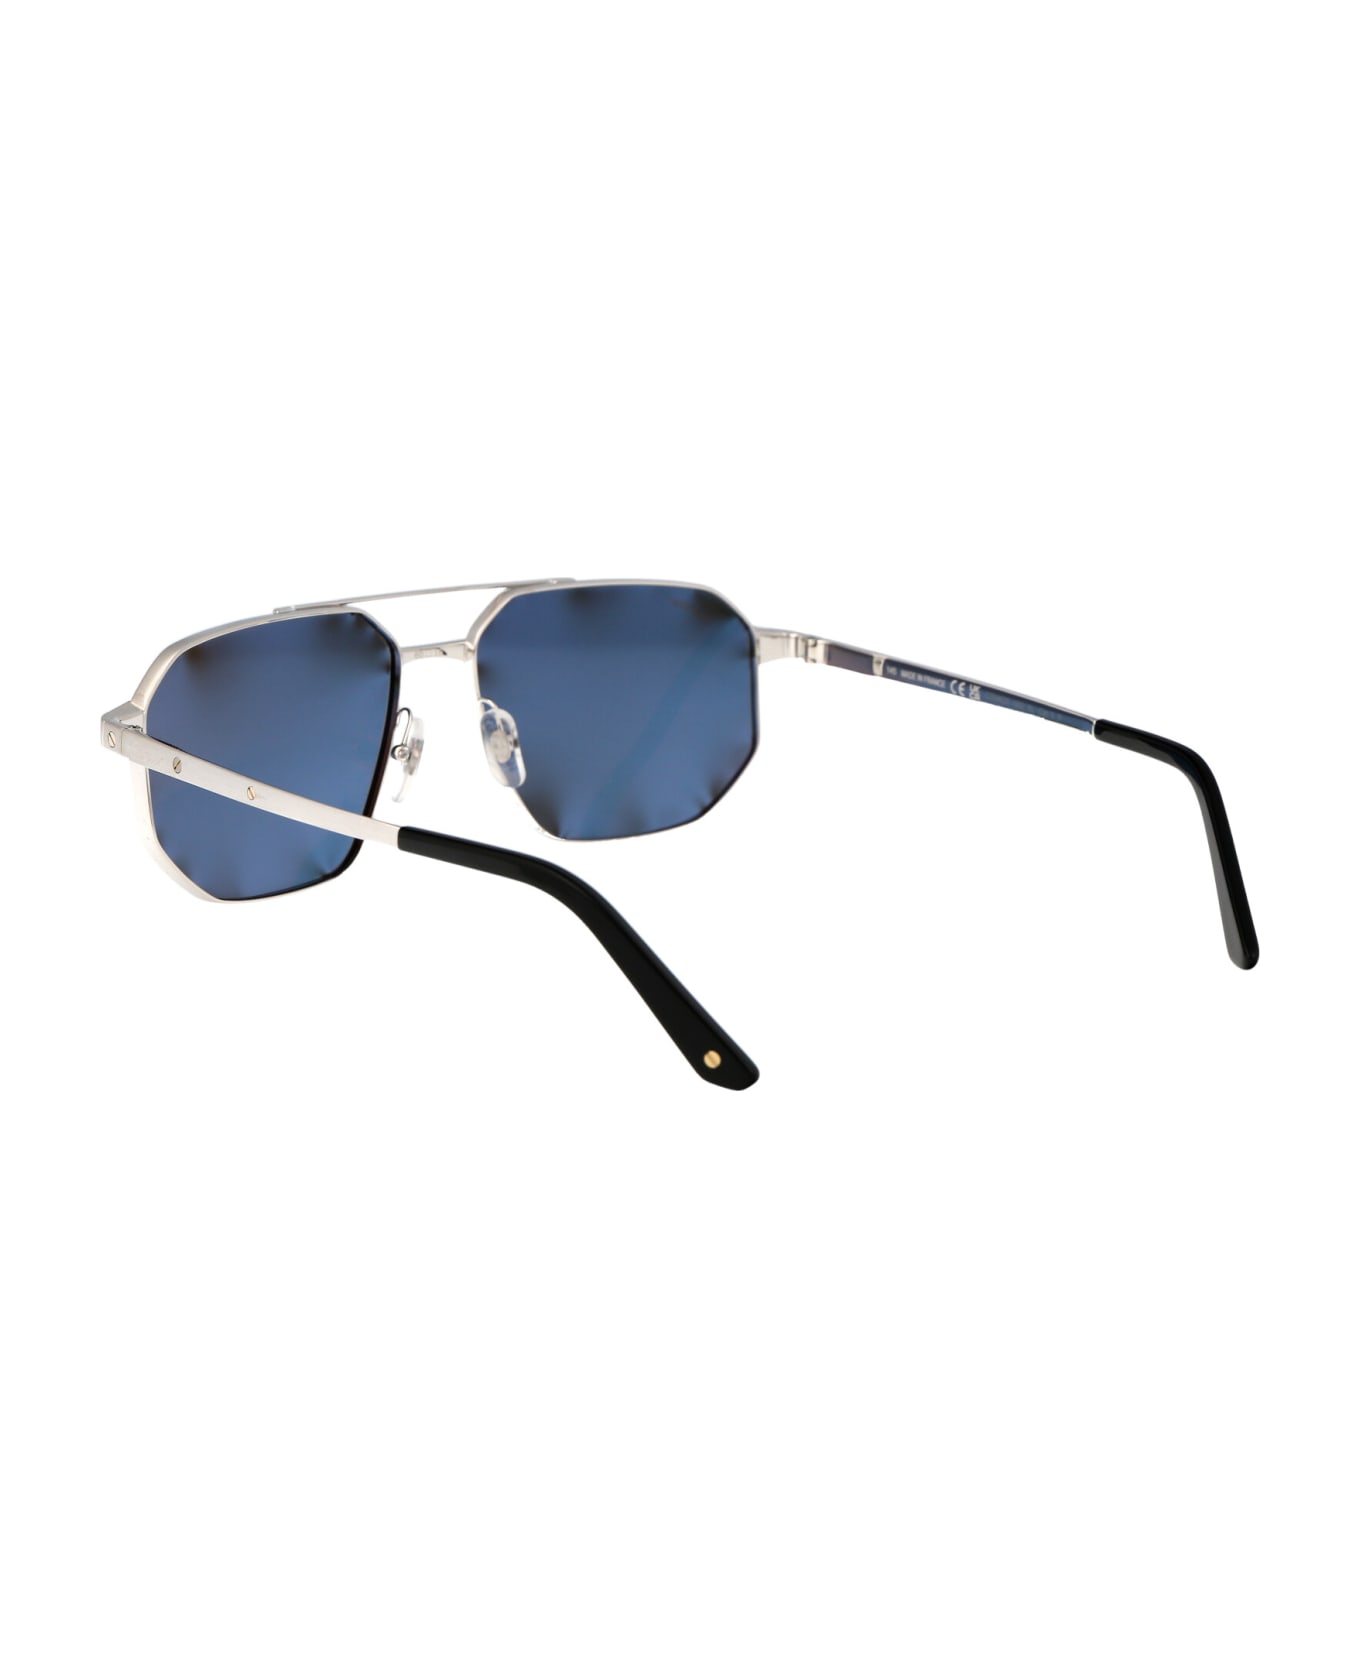 Cartier Eyewear Ct0462s Sunglasses - 002 SILVER SILVER BLUE サングラス